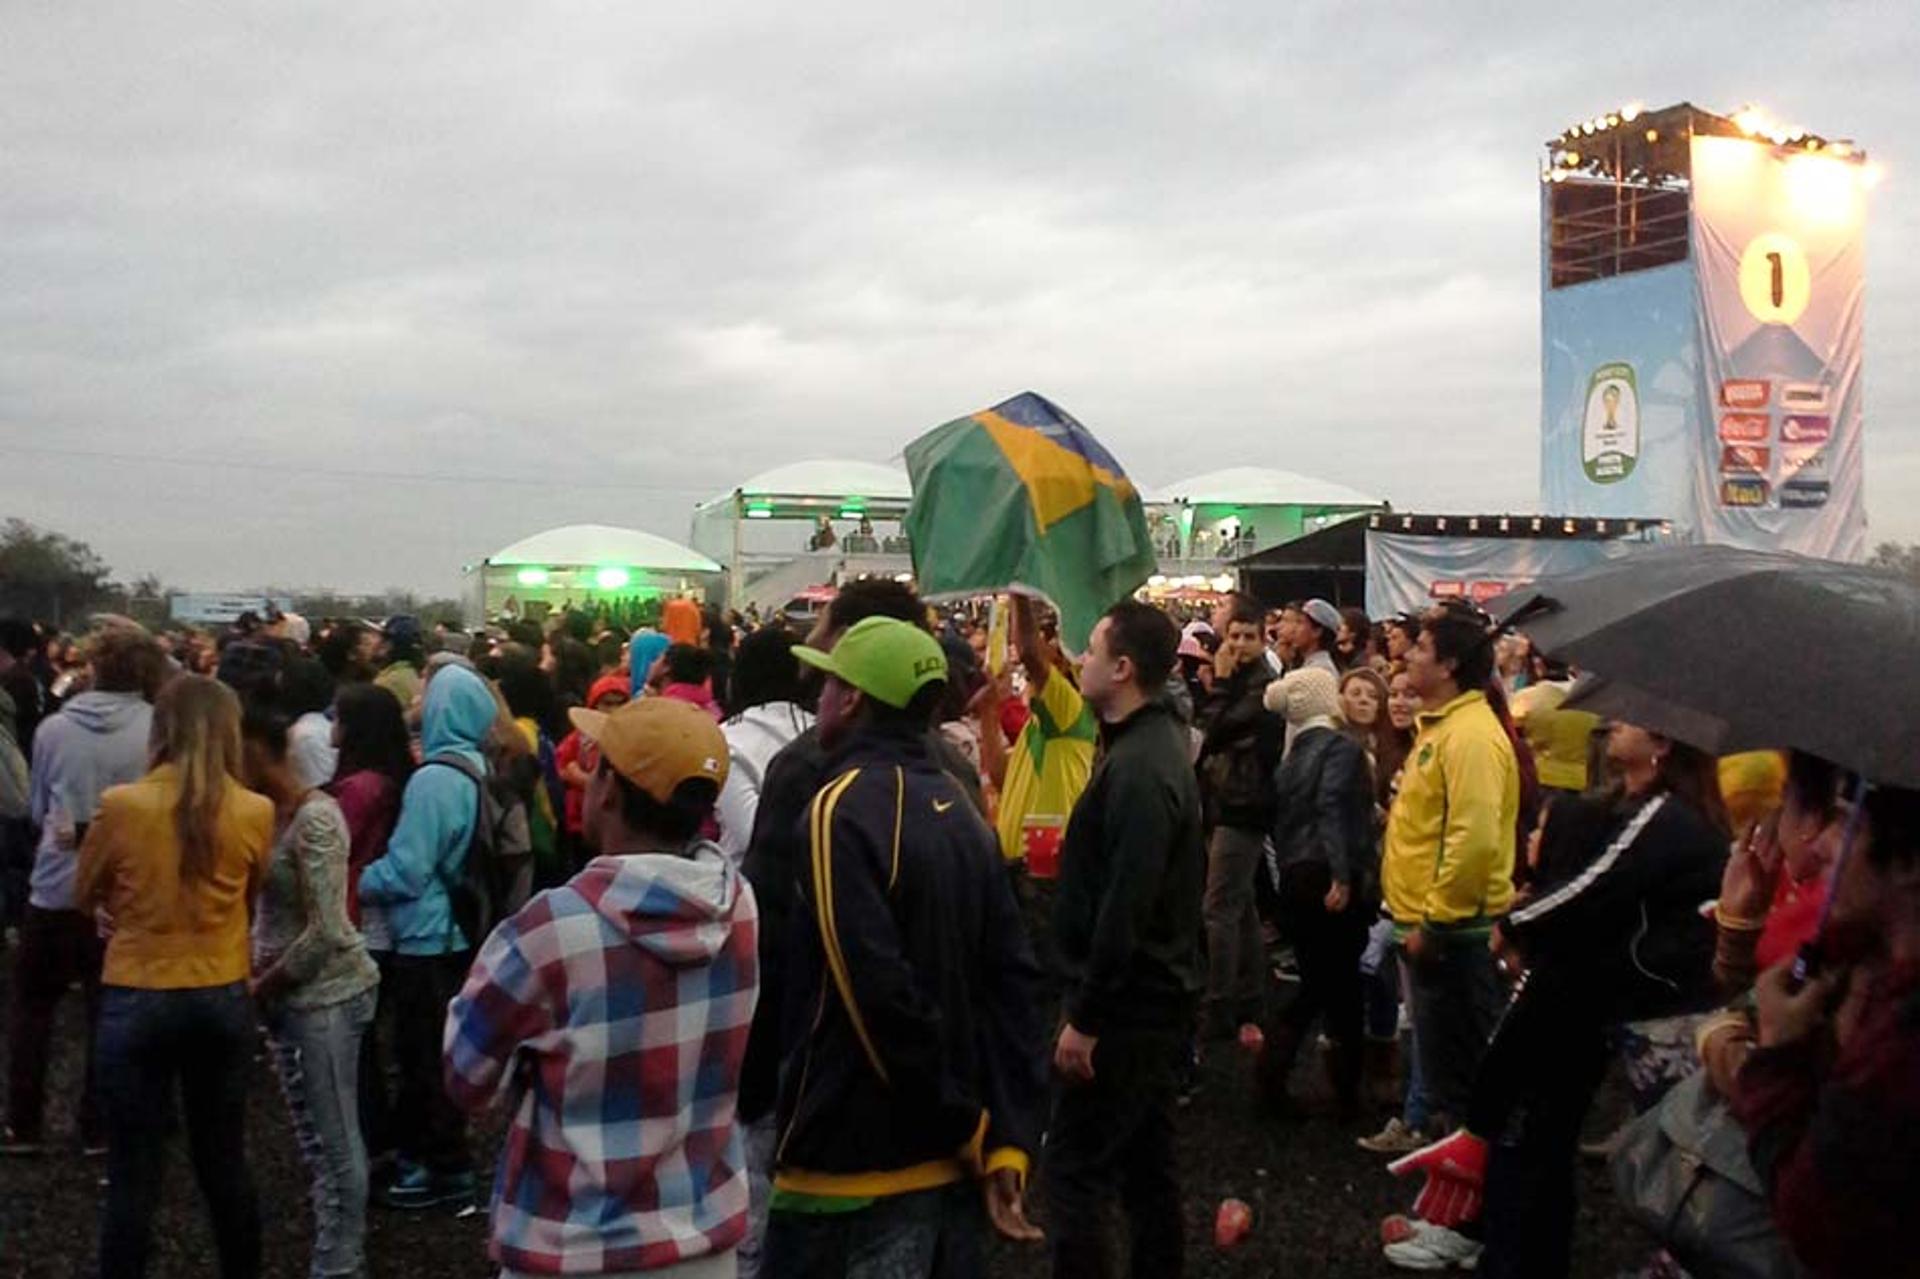 Fan Fest com chuva em Poa (Foto: Valdomiro Neto)